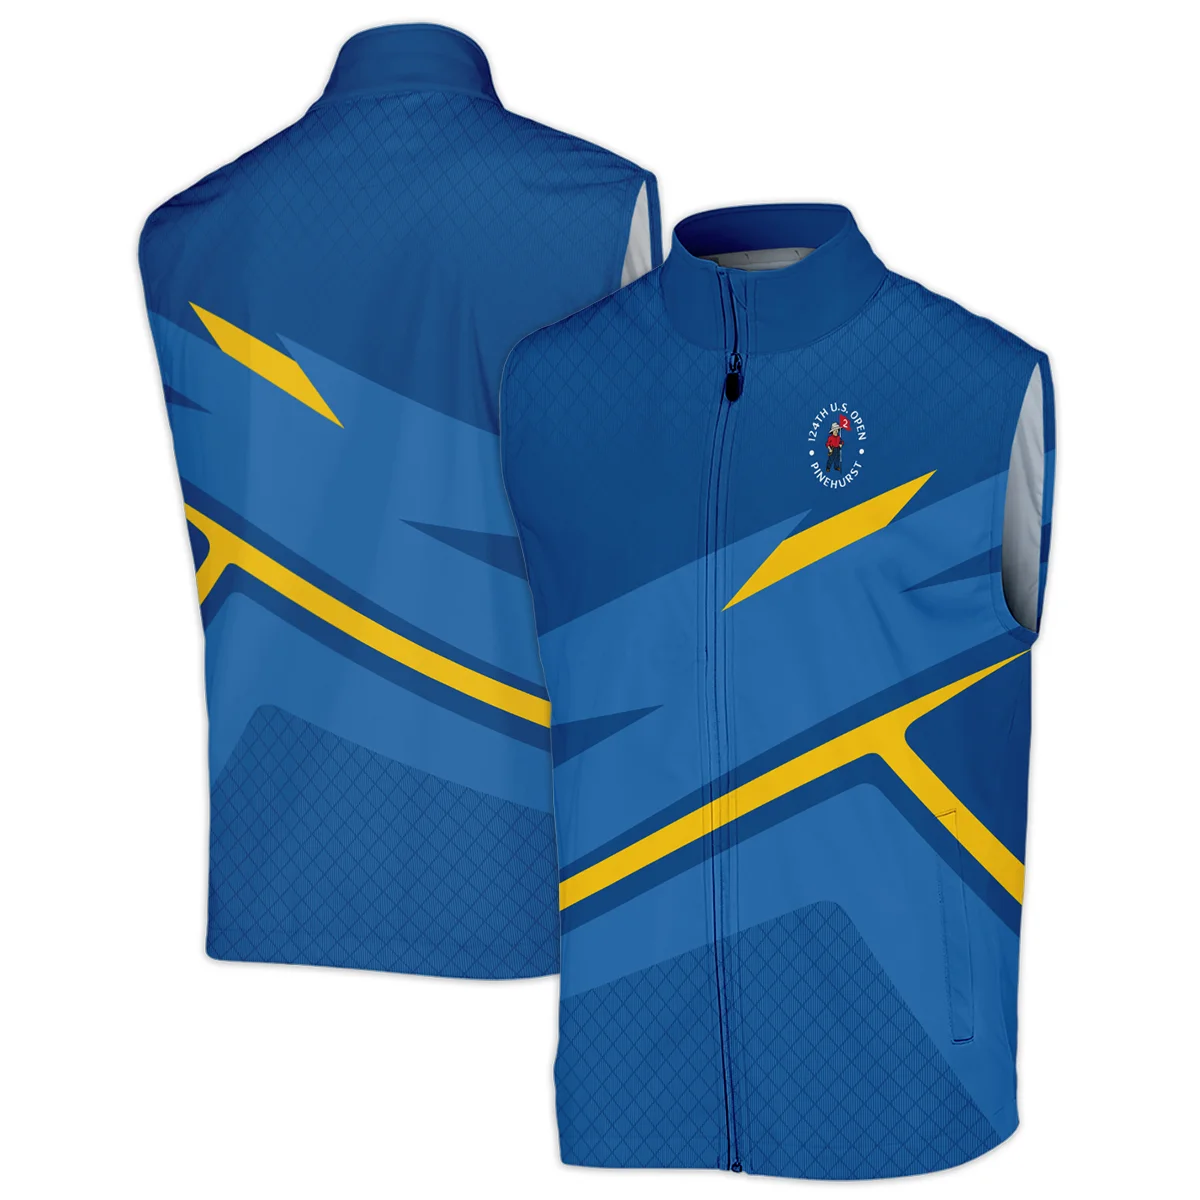 Titleist 124th U.S. Open Pinehurst Blue Yellow Mix Pattern Performance T-Shirt Style Classic